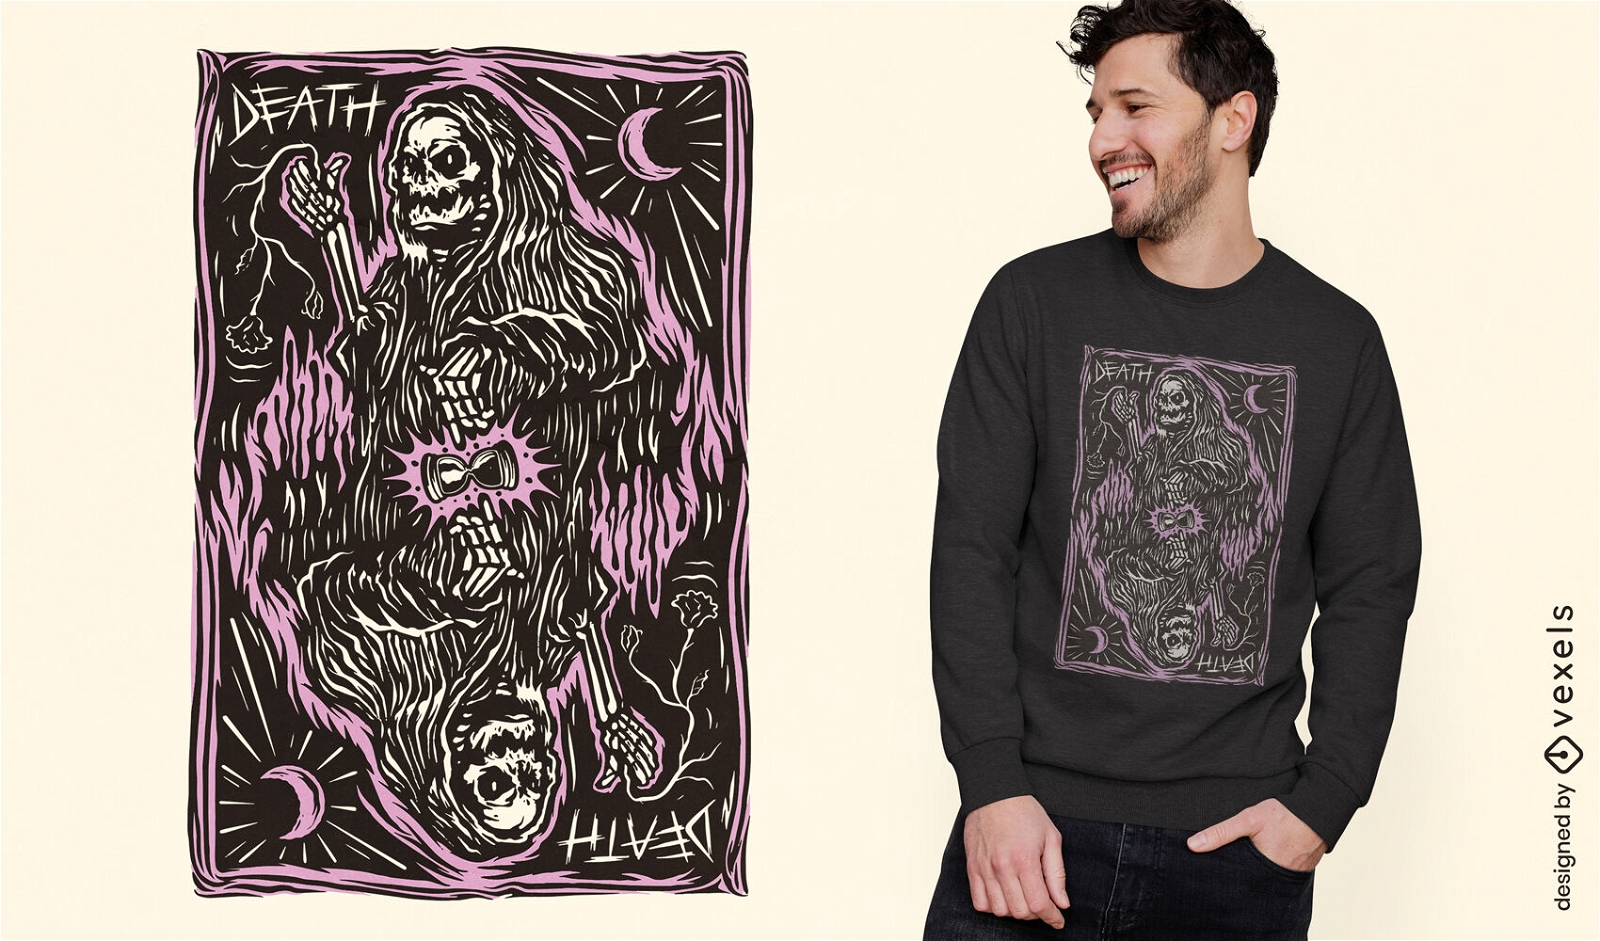 Skeleton death tarot card t-shirt design